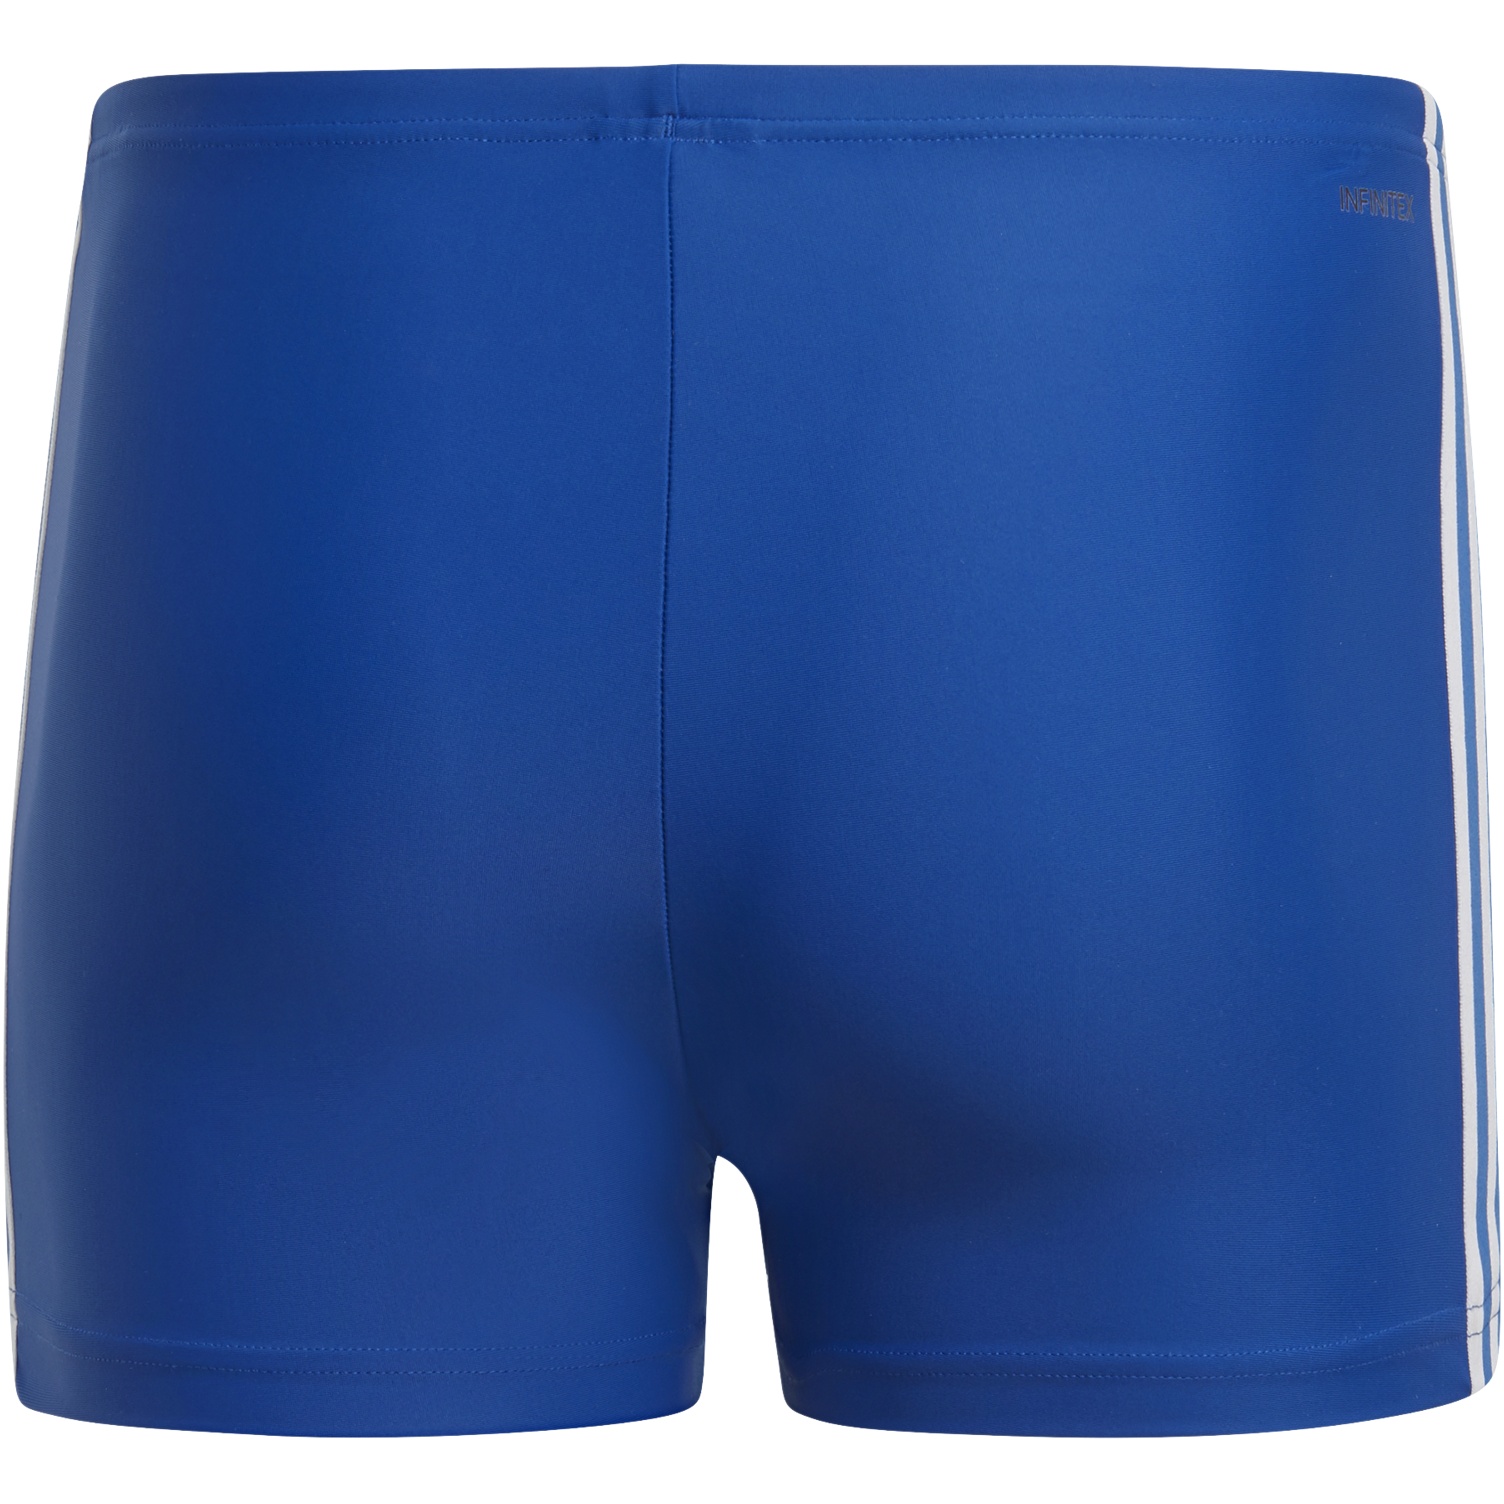 Langskomen makkelijk te gebruiken werknemer adidas Men's Boxers 3-Stripes Swim Shorts - collegiate royal/white DZ7523